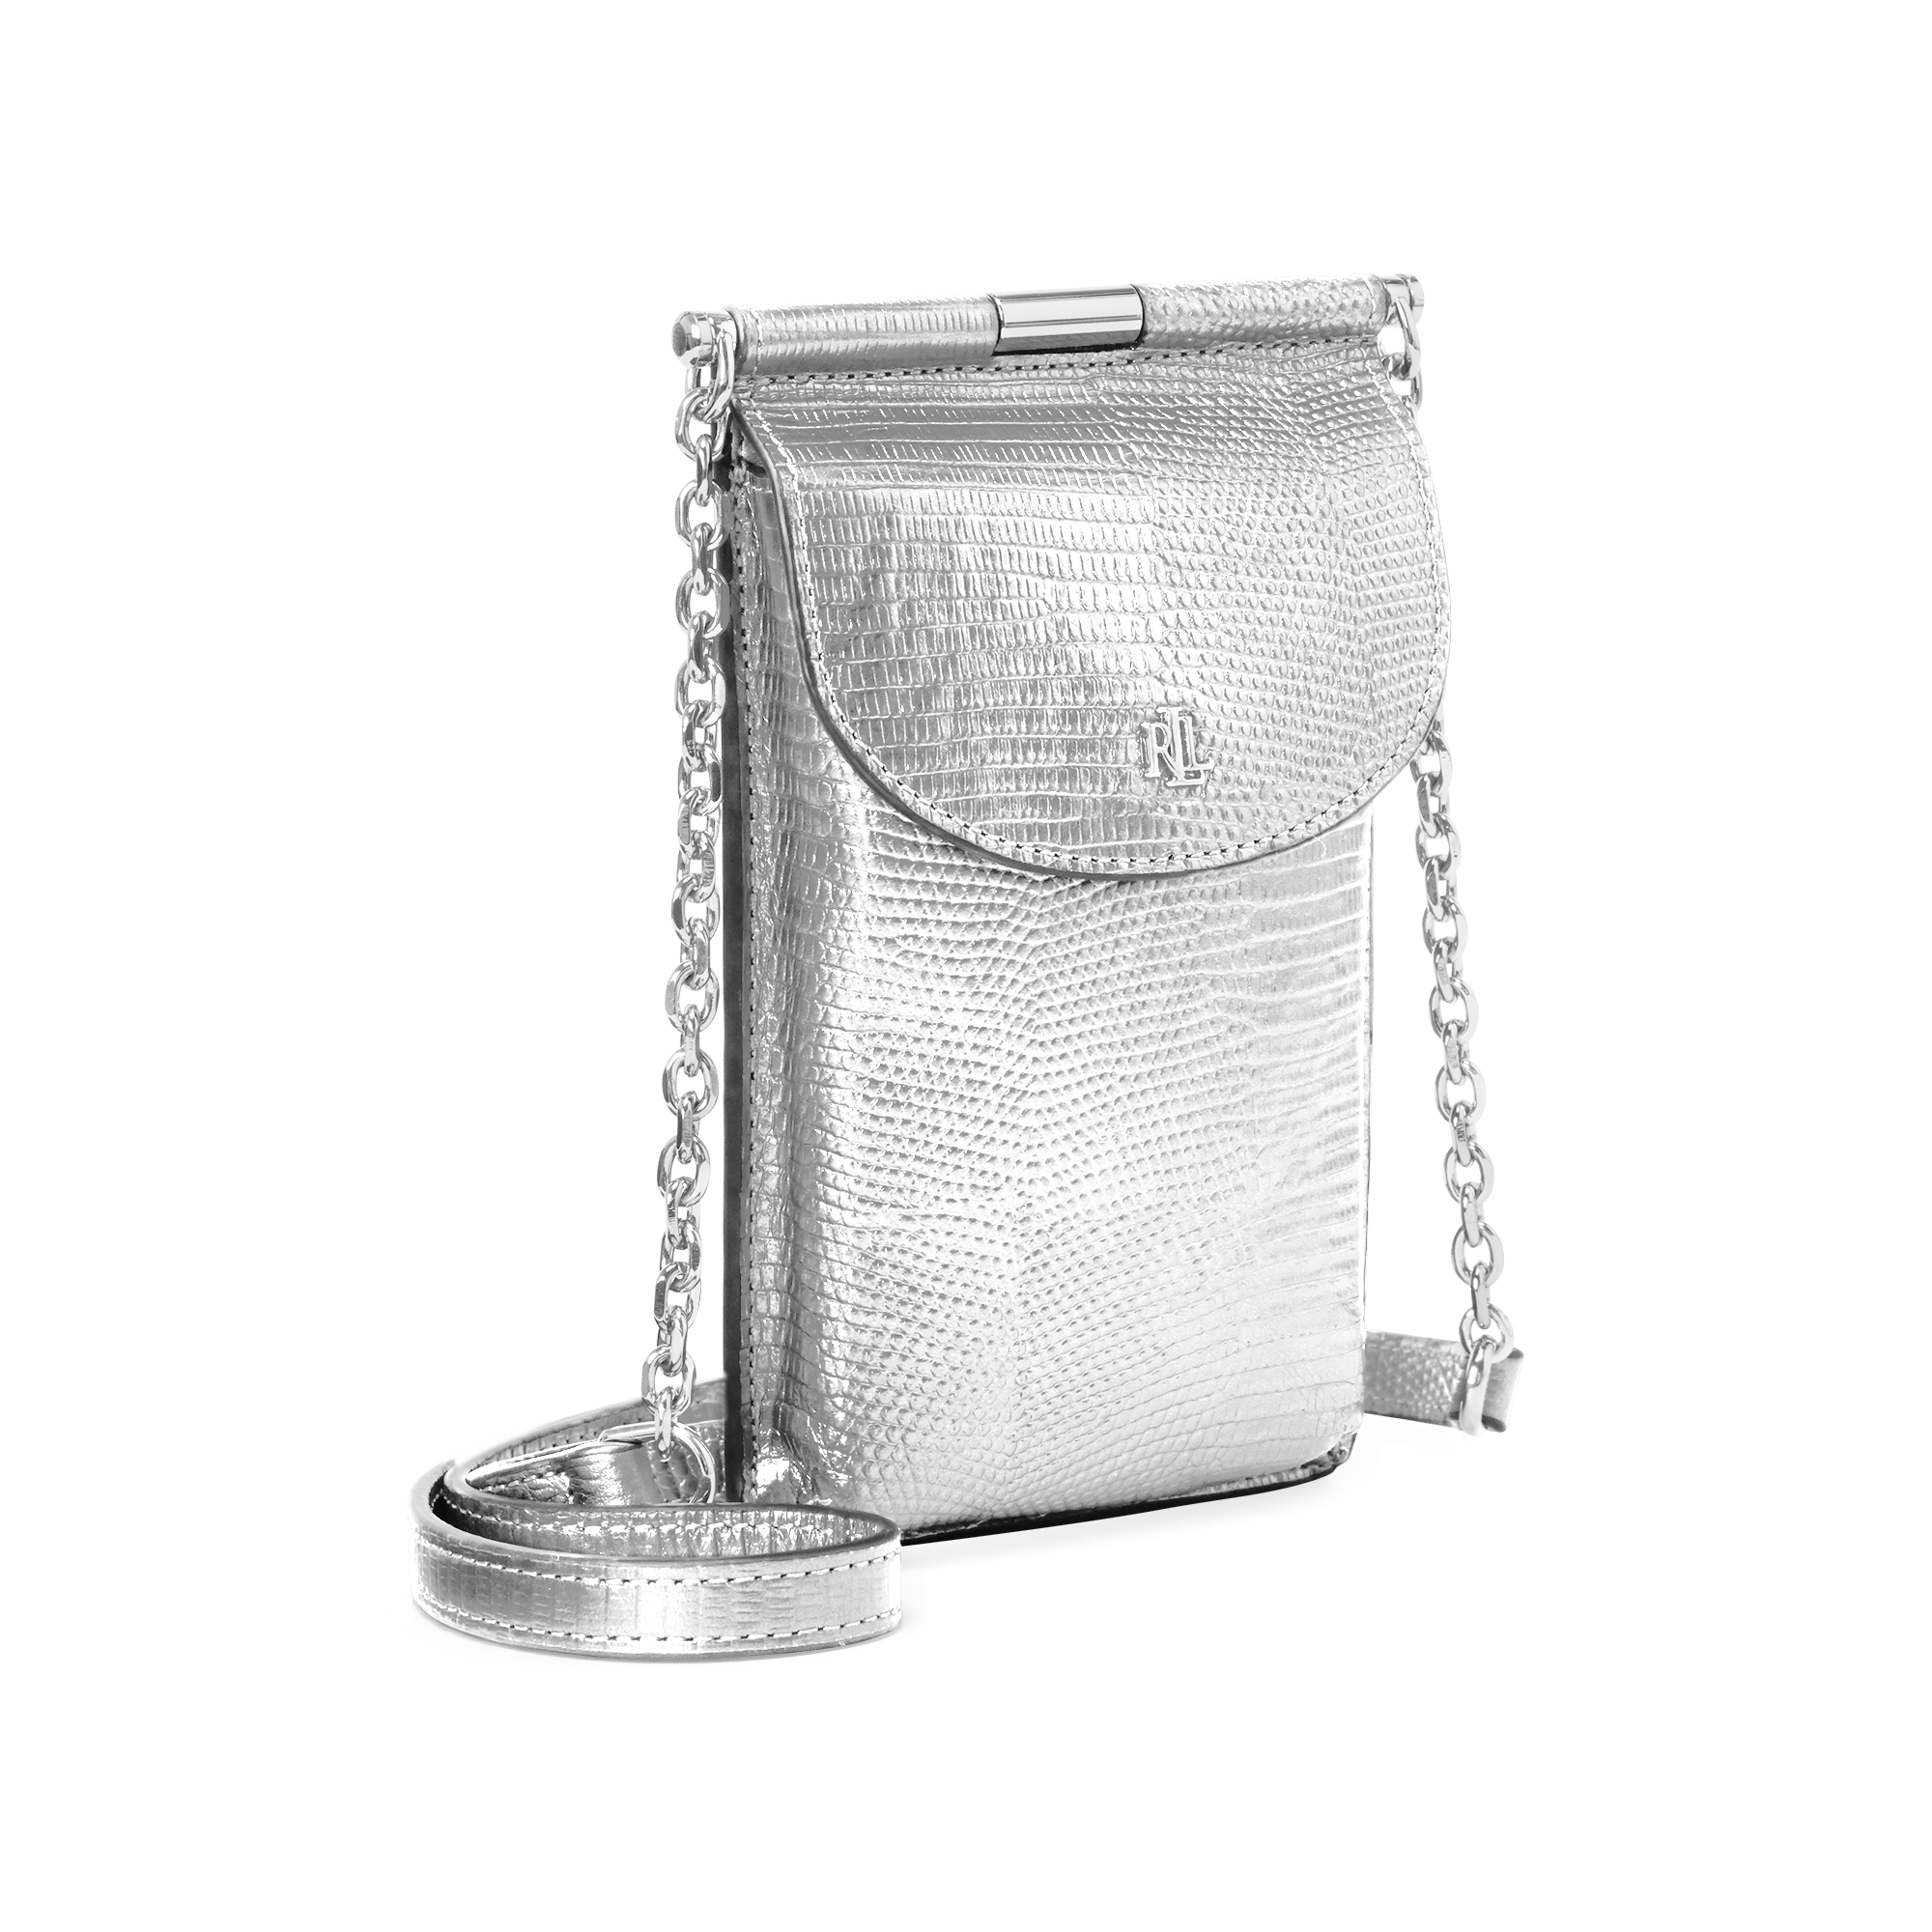 Ralph Lauren Lizard-Print Leather Phone Bag. 2